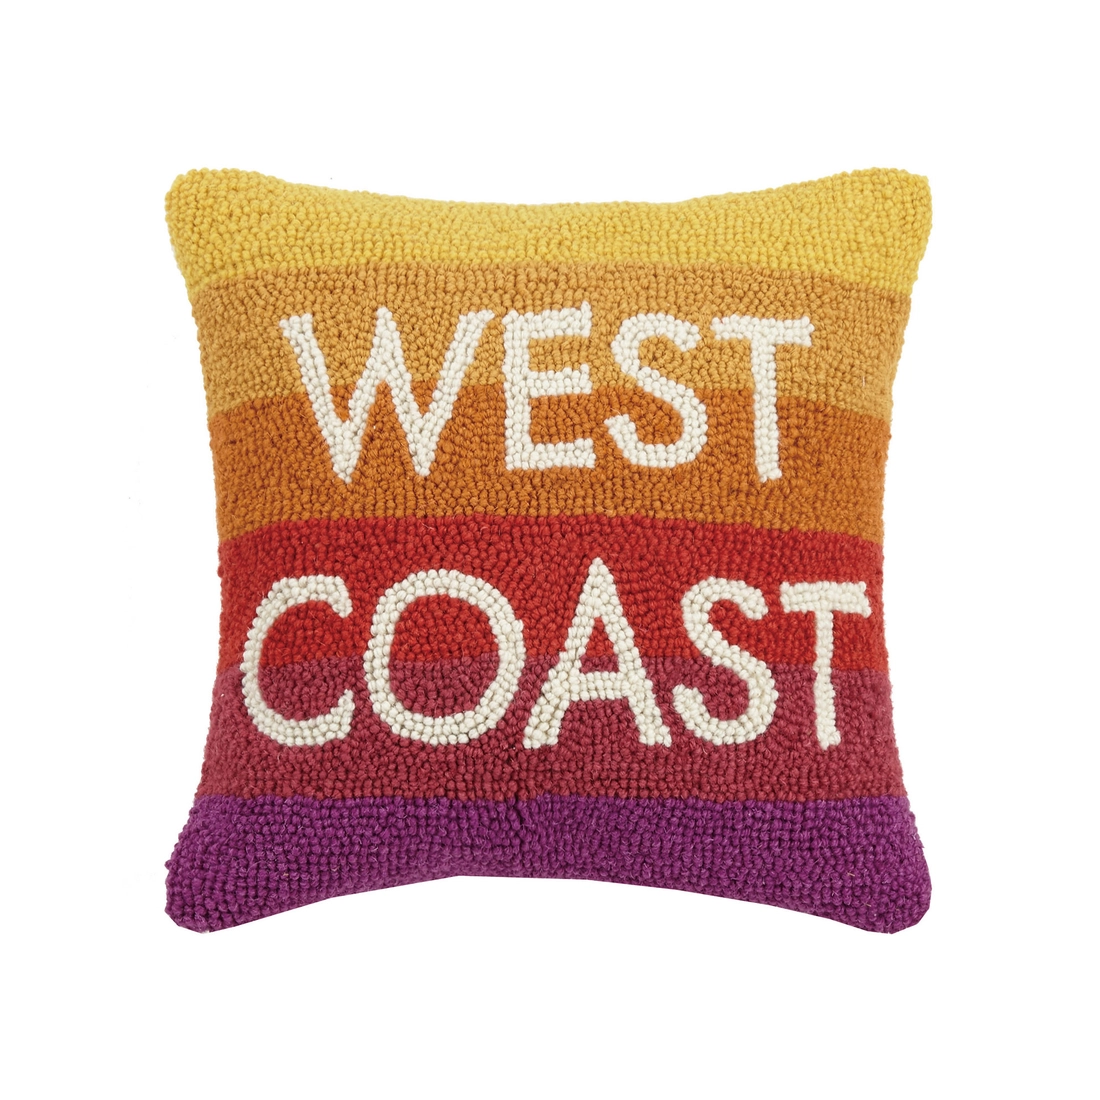 West Coast Hook Pillow